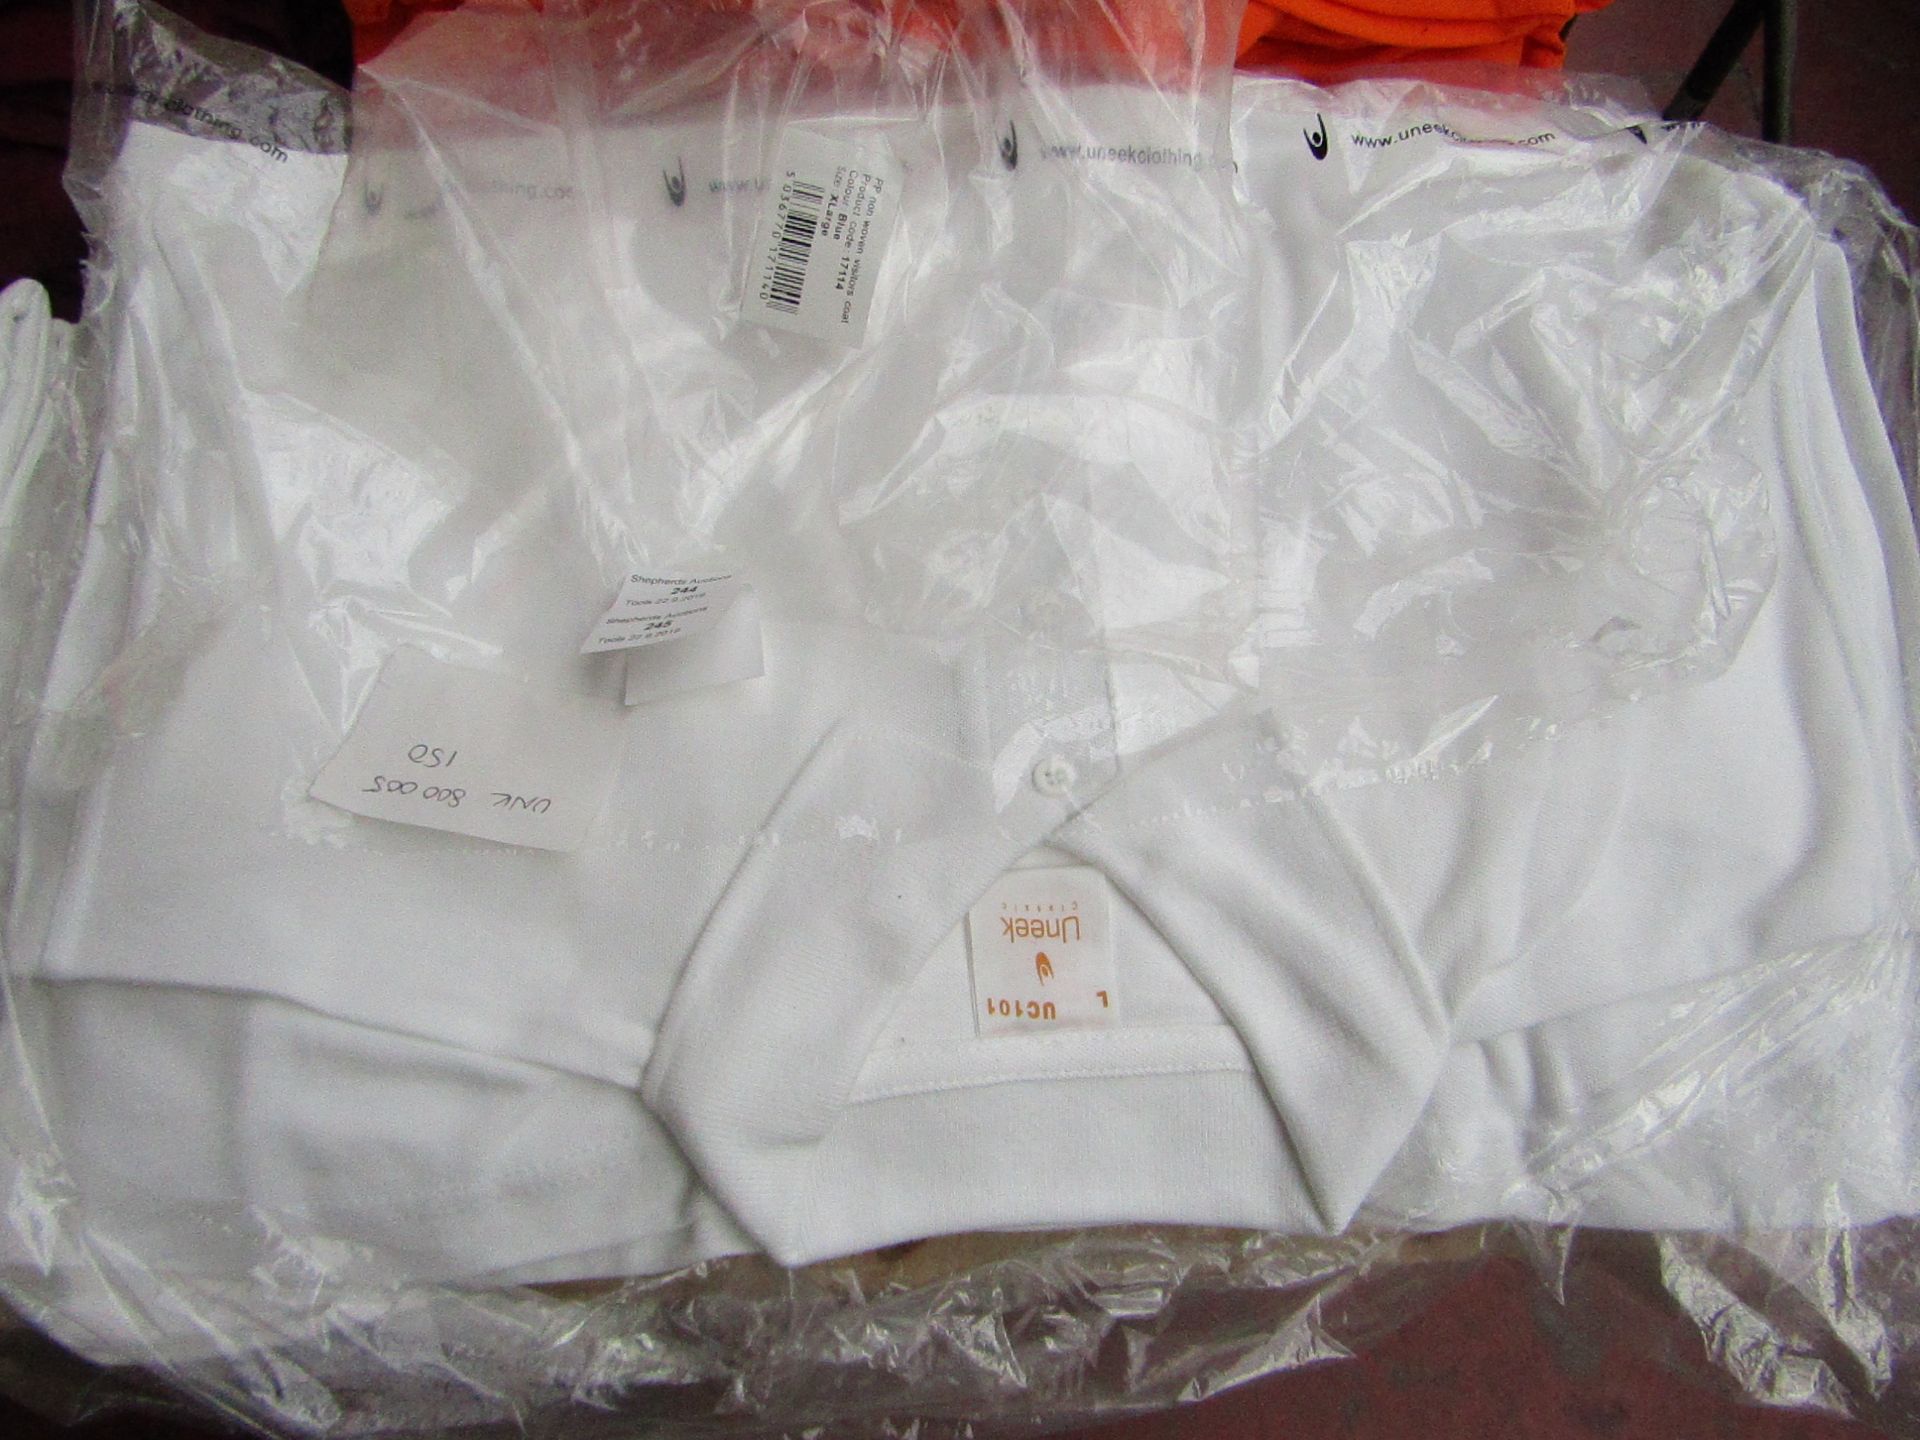 4 x Uneek Classic, Polo Shirt, Size L, New